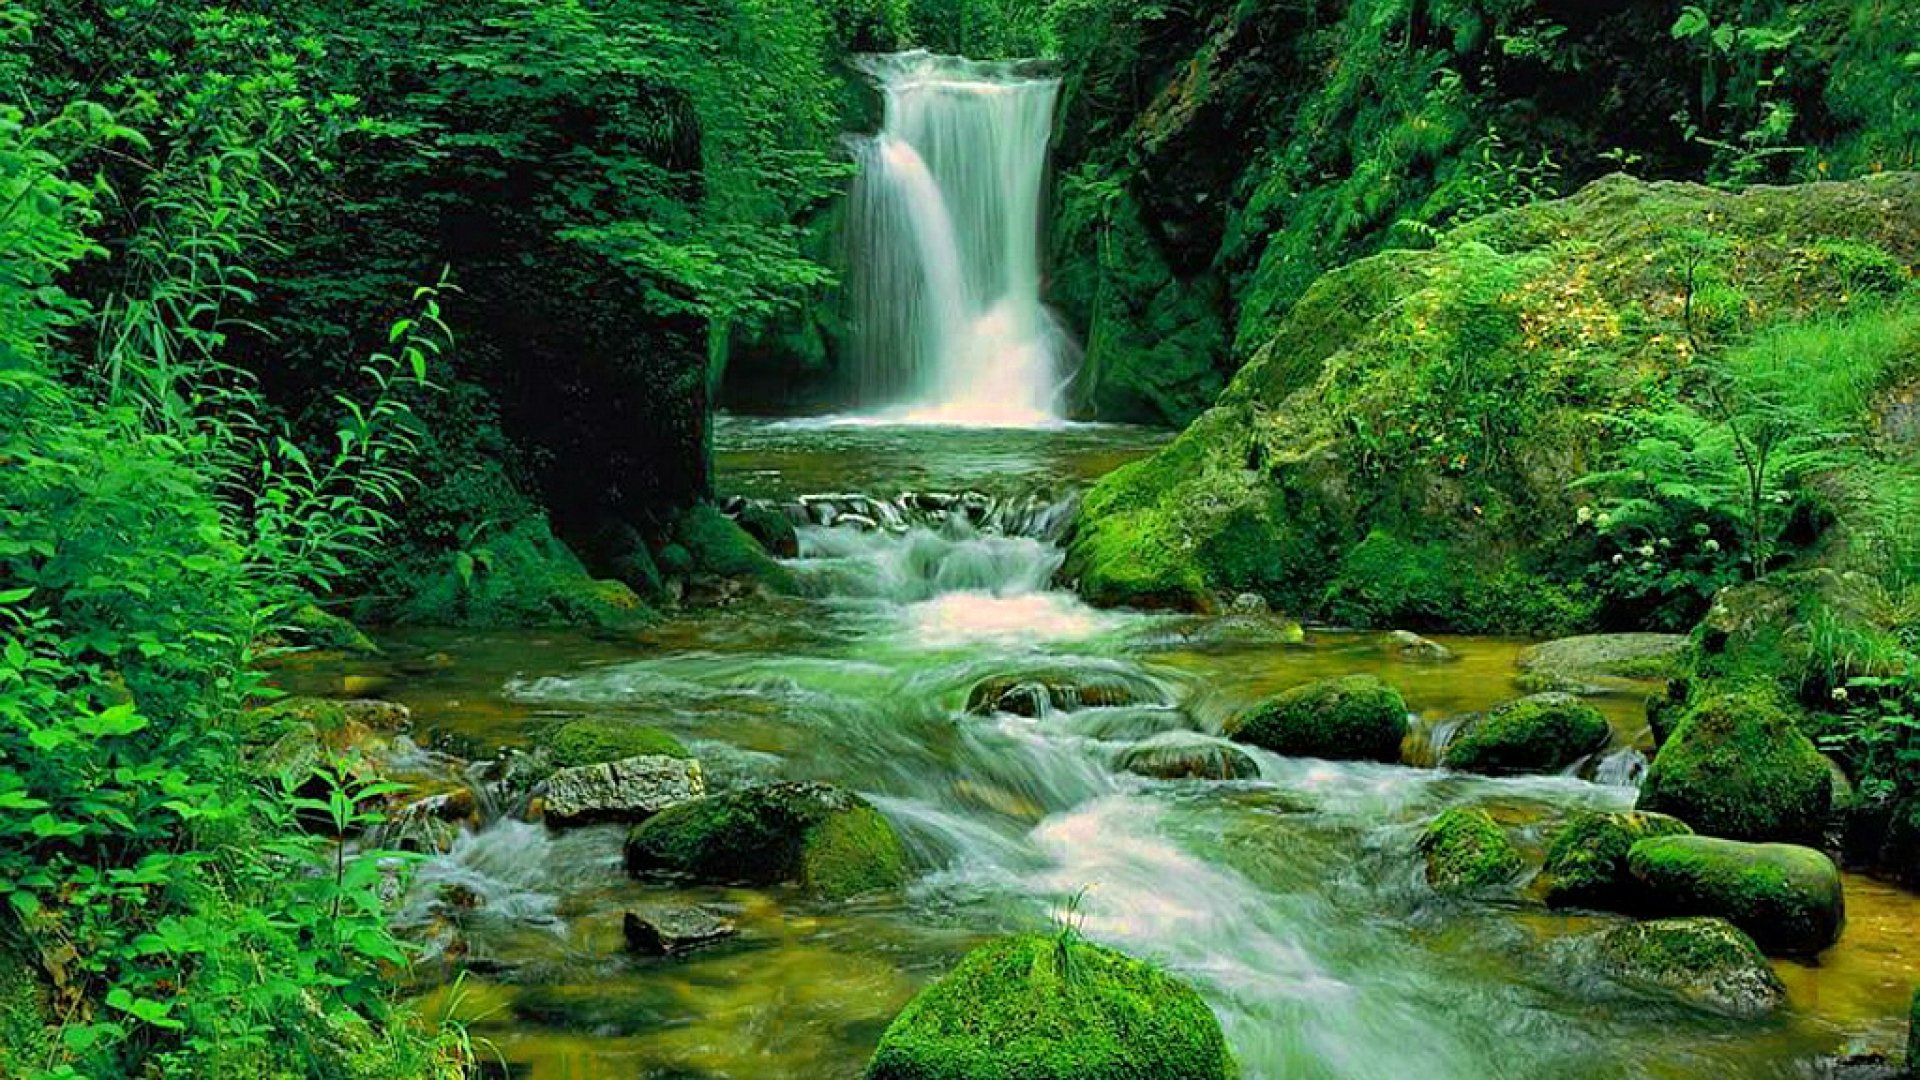 Green Waterfall Hd Wallpaper Background Image 1920x1080 Id568807 Wallpaper Abyss